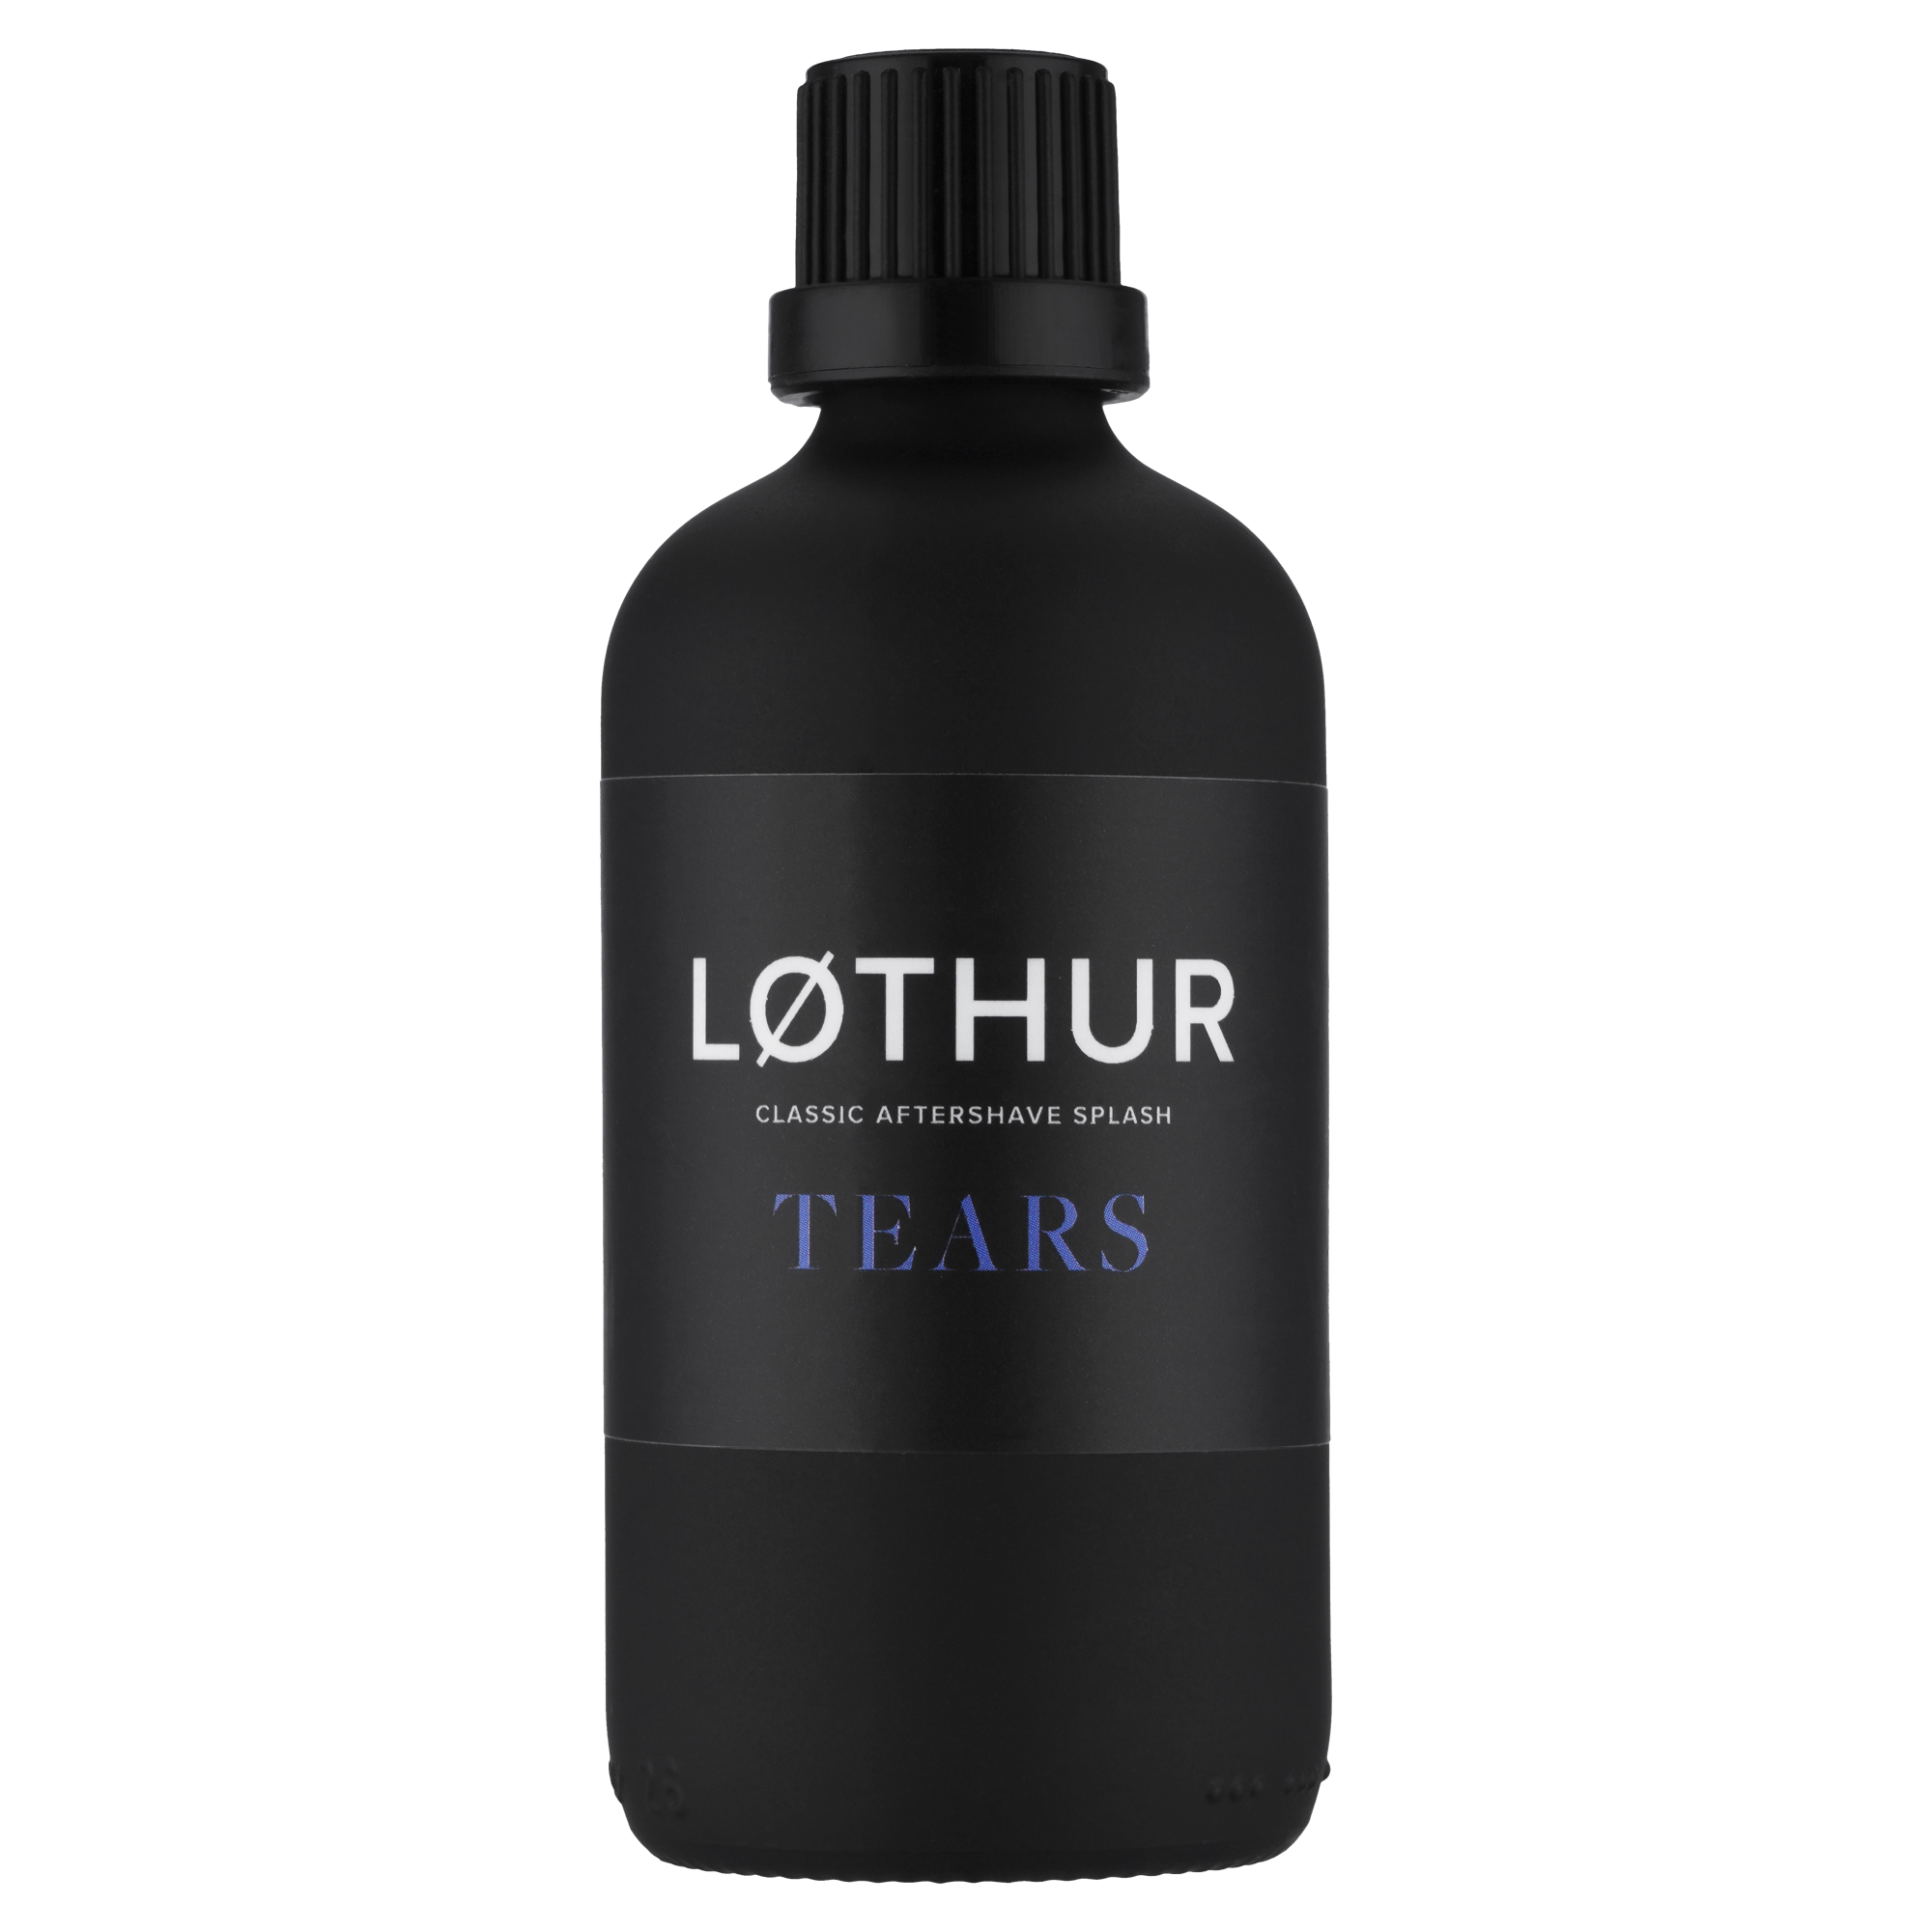 Lothur Tears Classic Aftershave Splash